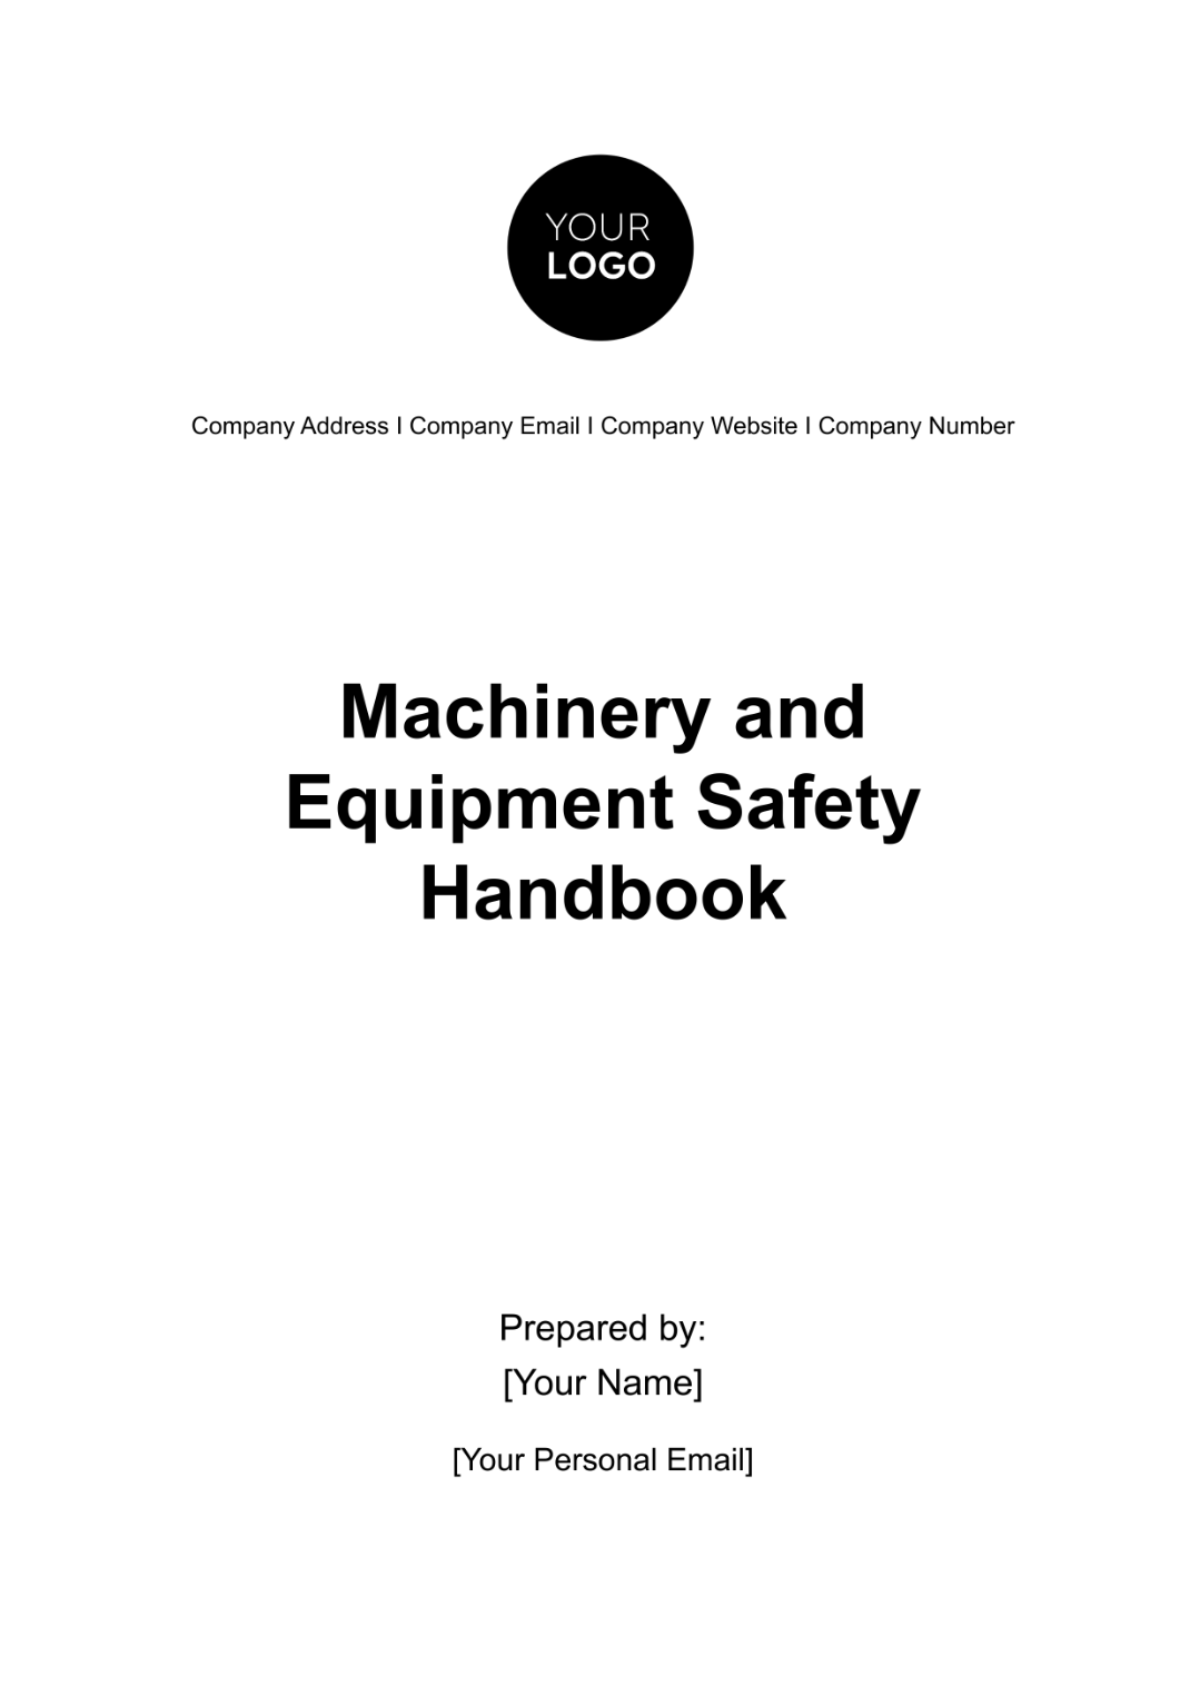 Machinery and Equipment Safety Handbook HR Template